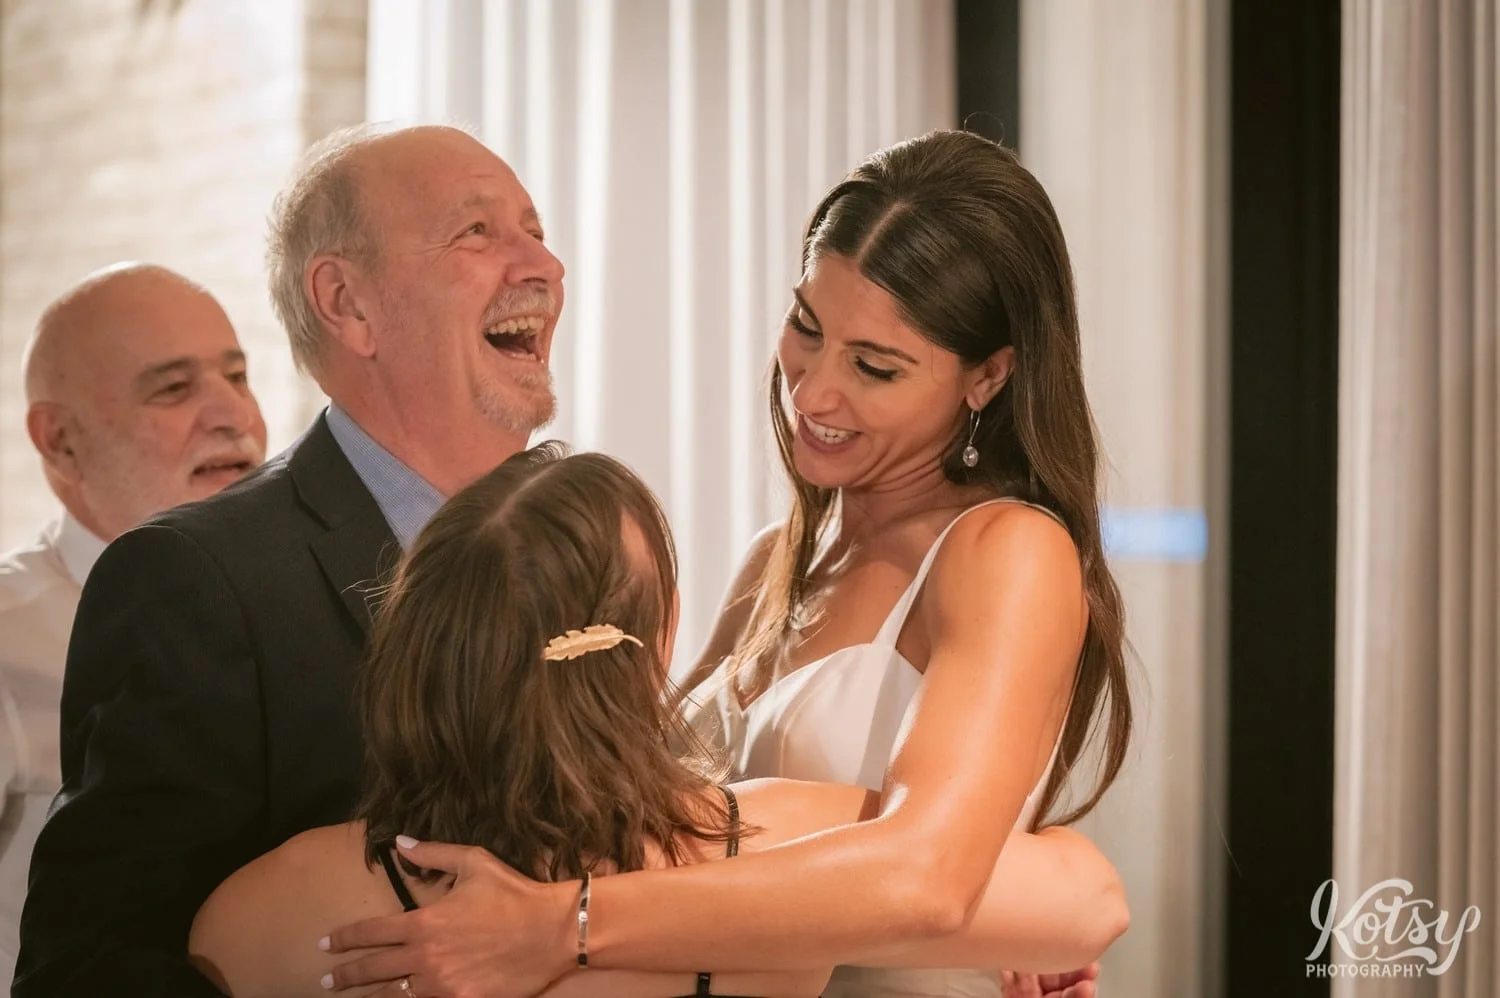 A bride and wedding guest enjoy a laugh during a Village Loft wedding reception in Toronto, Canada